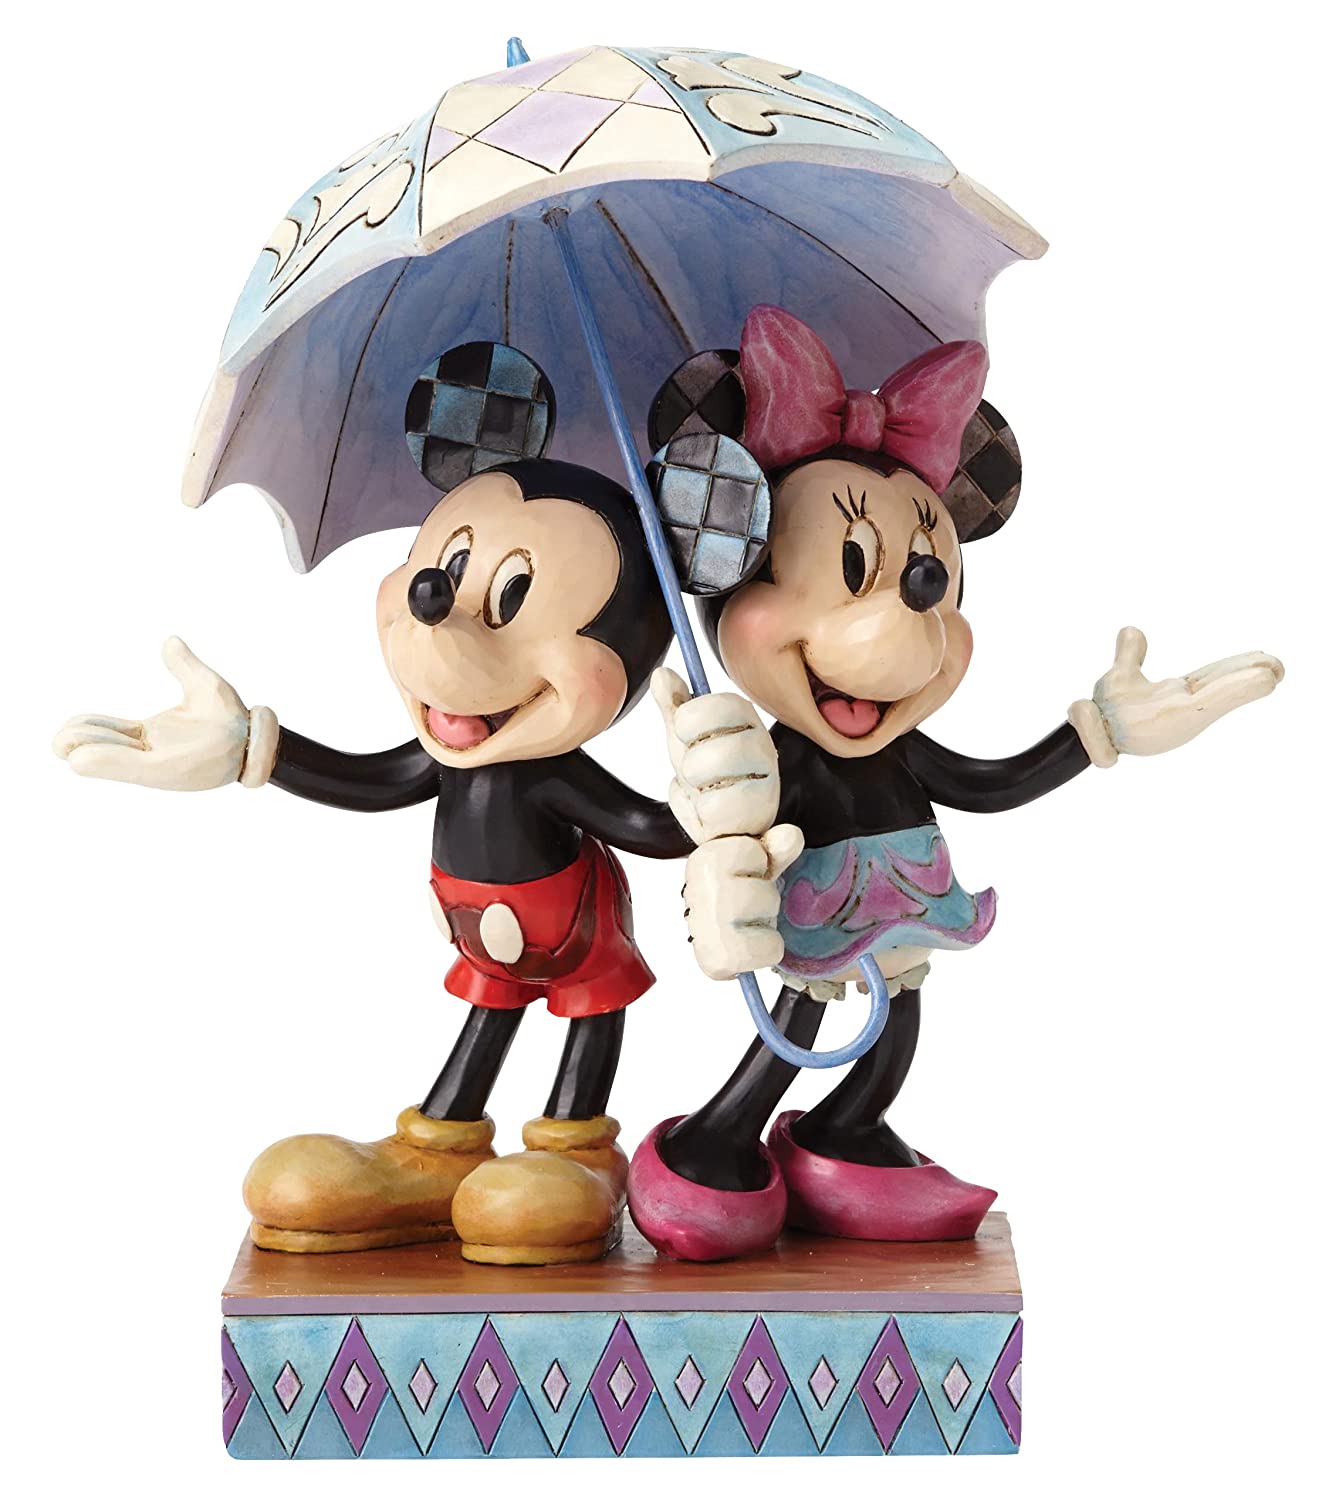 Enesco Jim Shore Disney Traditions Minnie Mouse Mickey Mouse Umbrella Stone Collection Figure